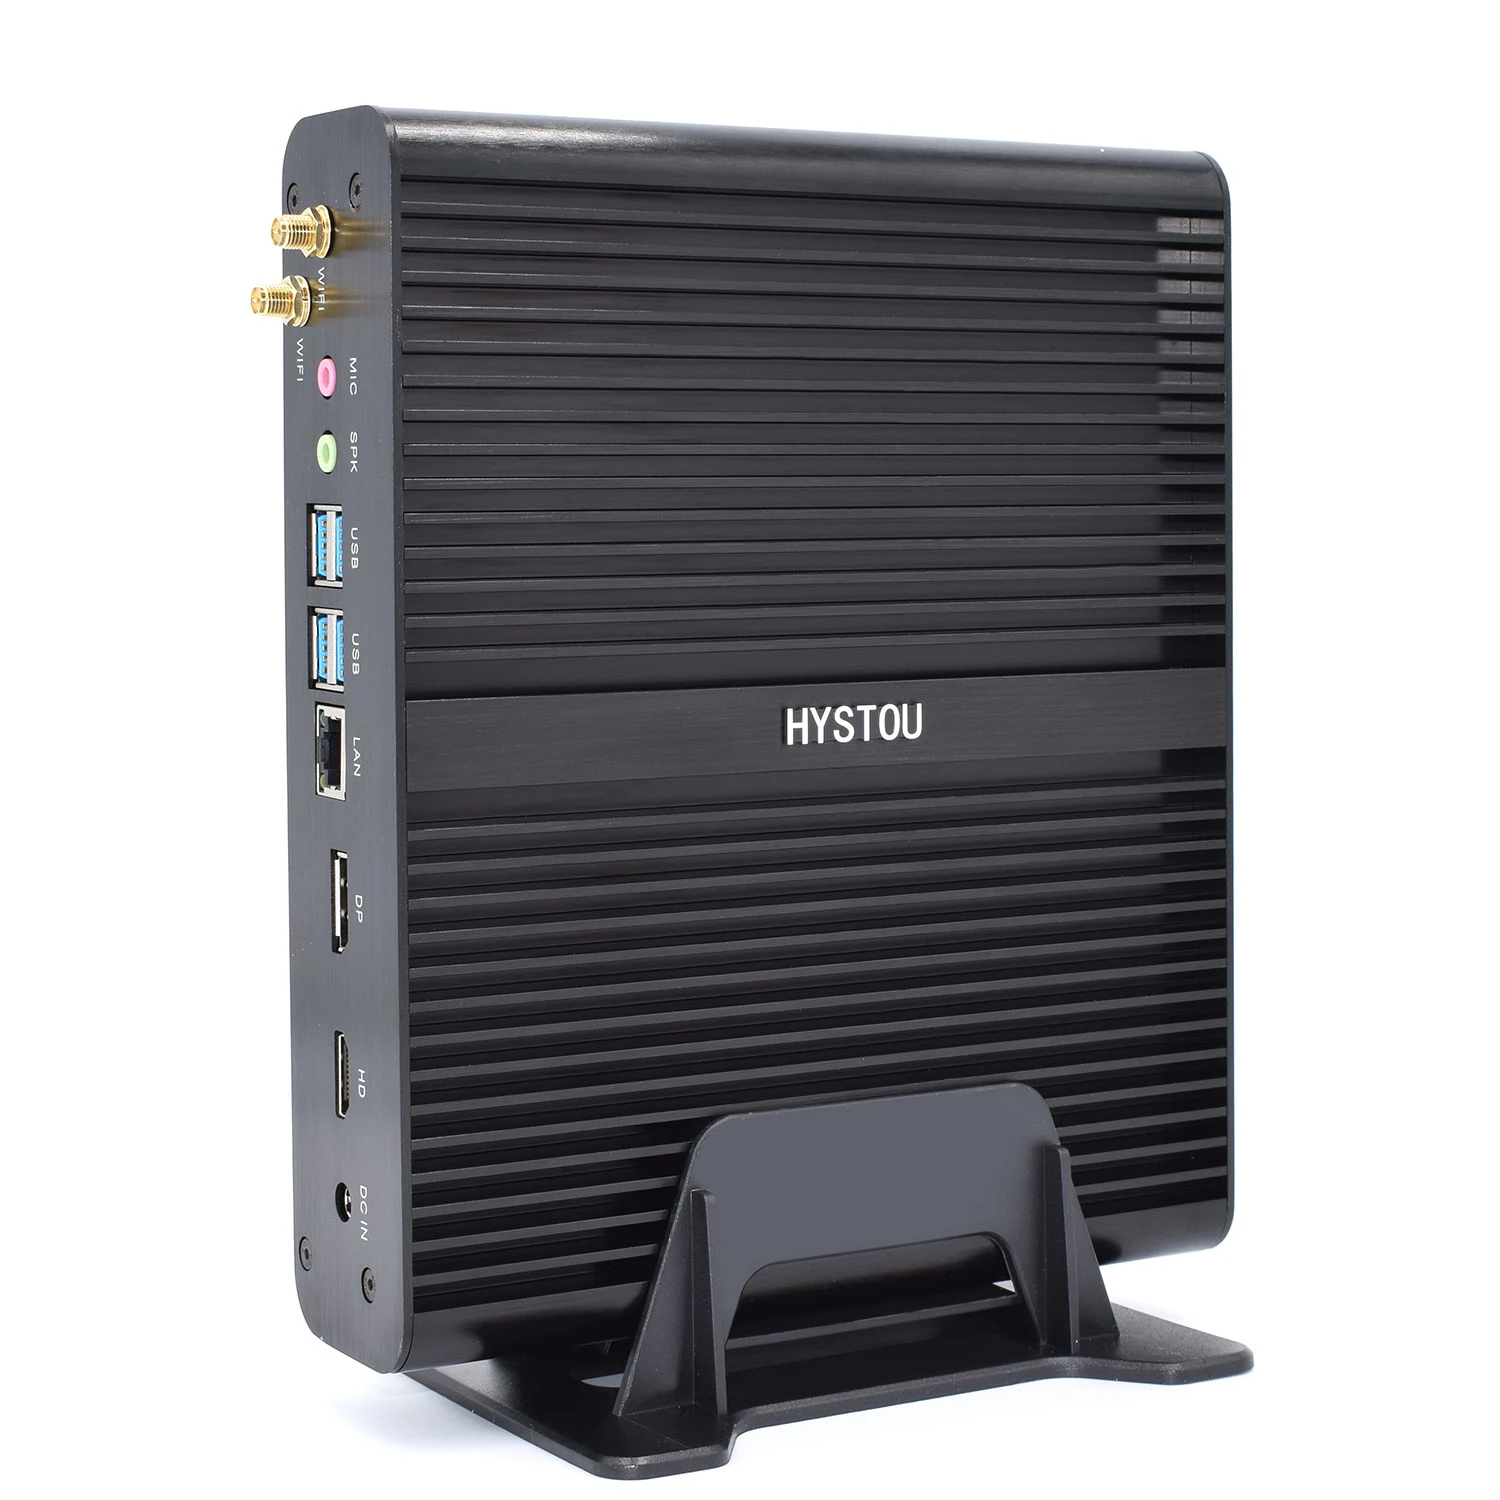 

2019 HYSTOU i7 8550u Fanless Mini PC 12V Computers with dual display Gigabit Lan USB i7 Micro PC X86 MAX 32G DDR4, N/a